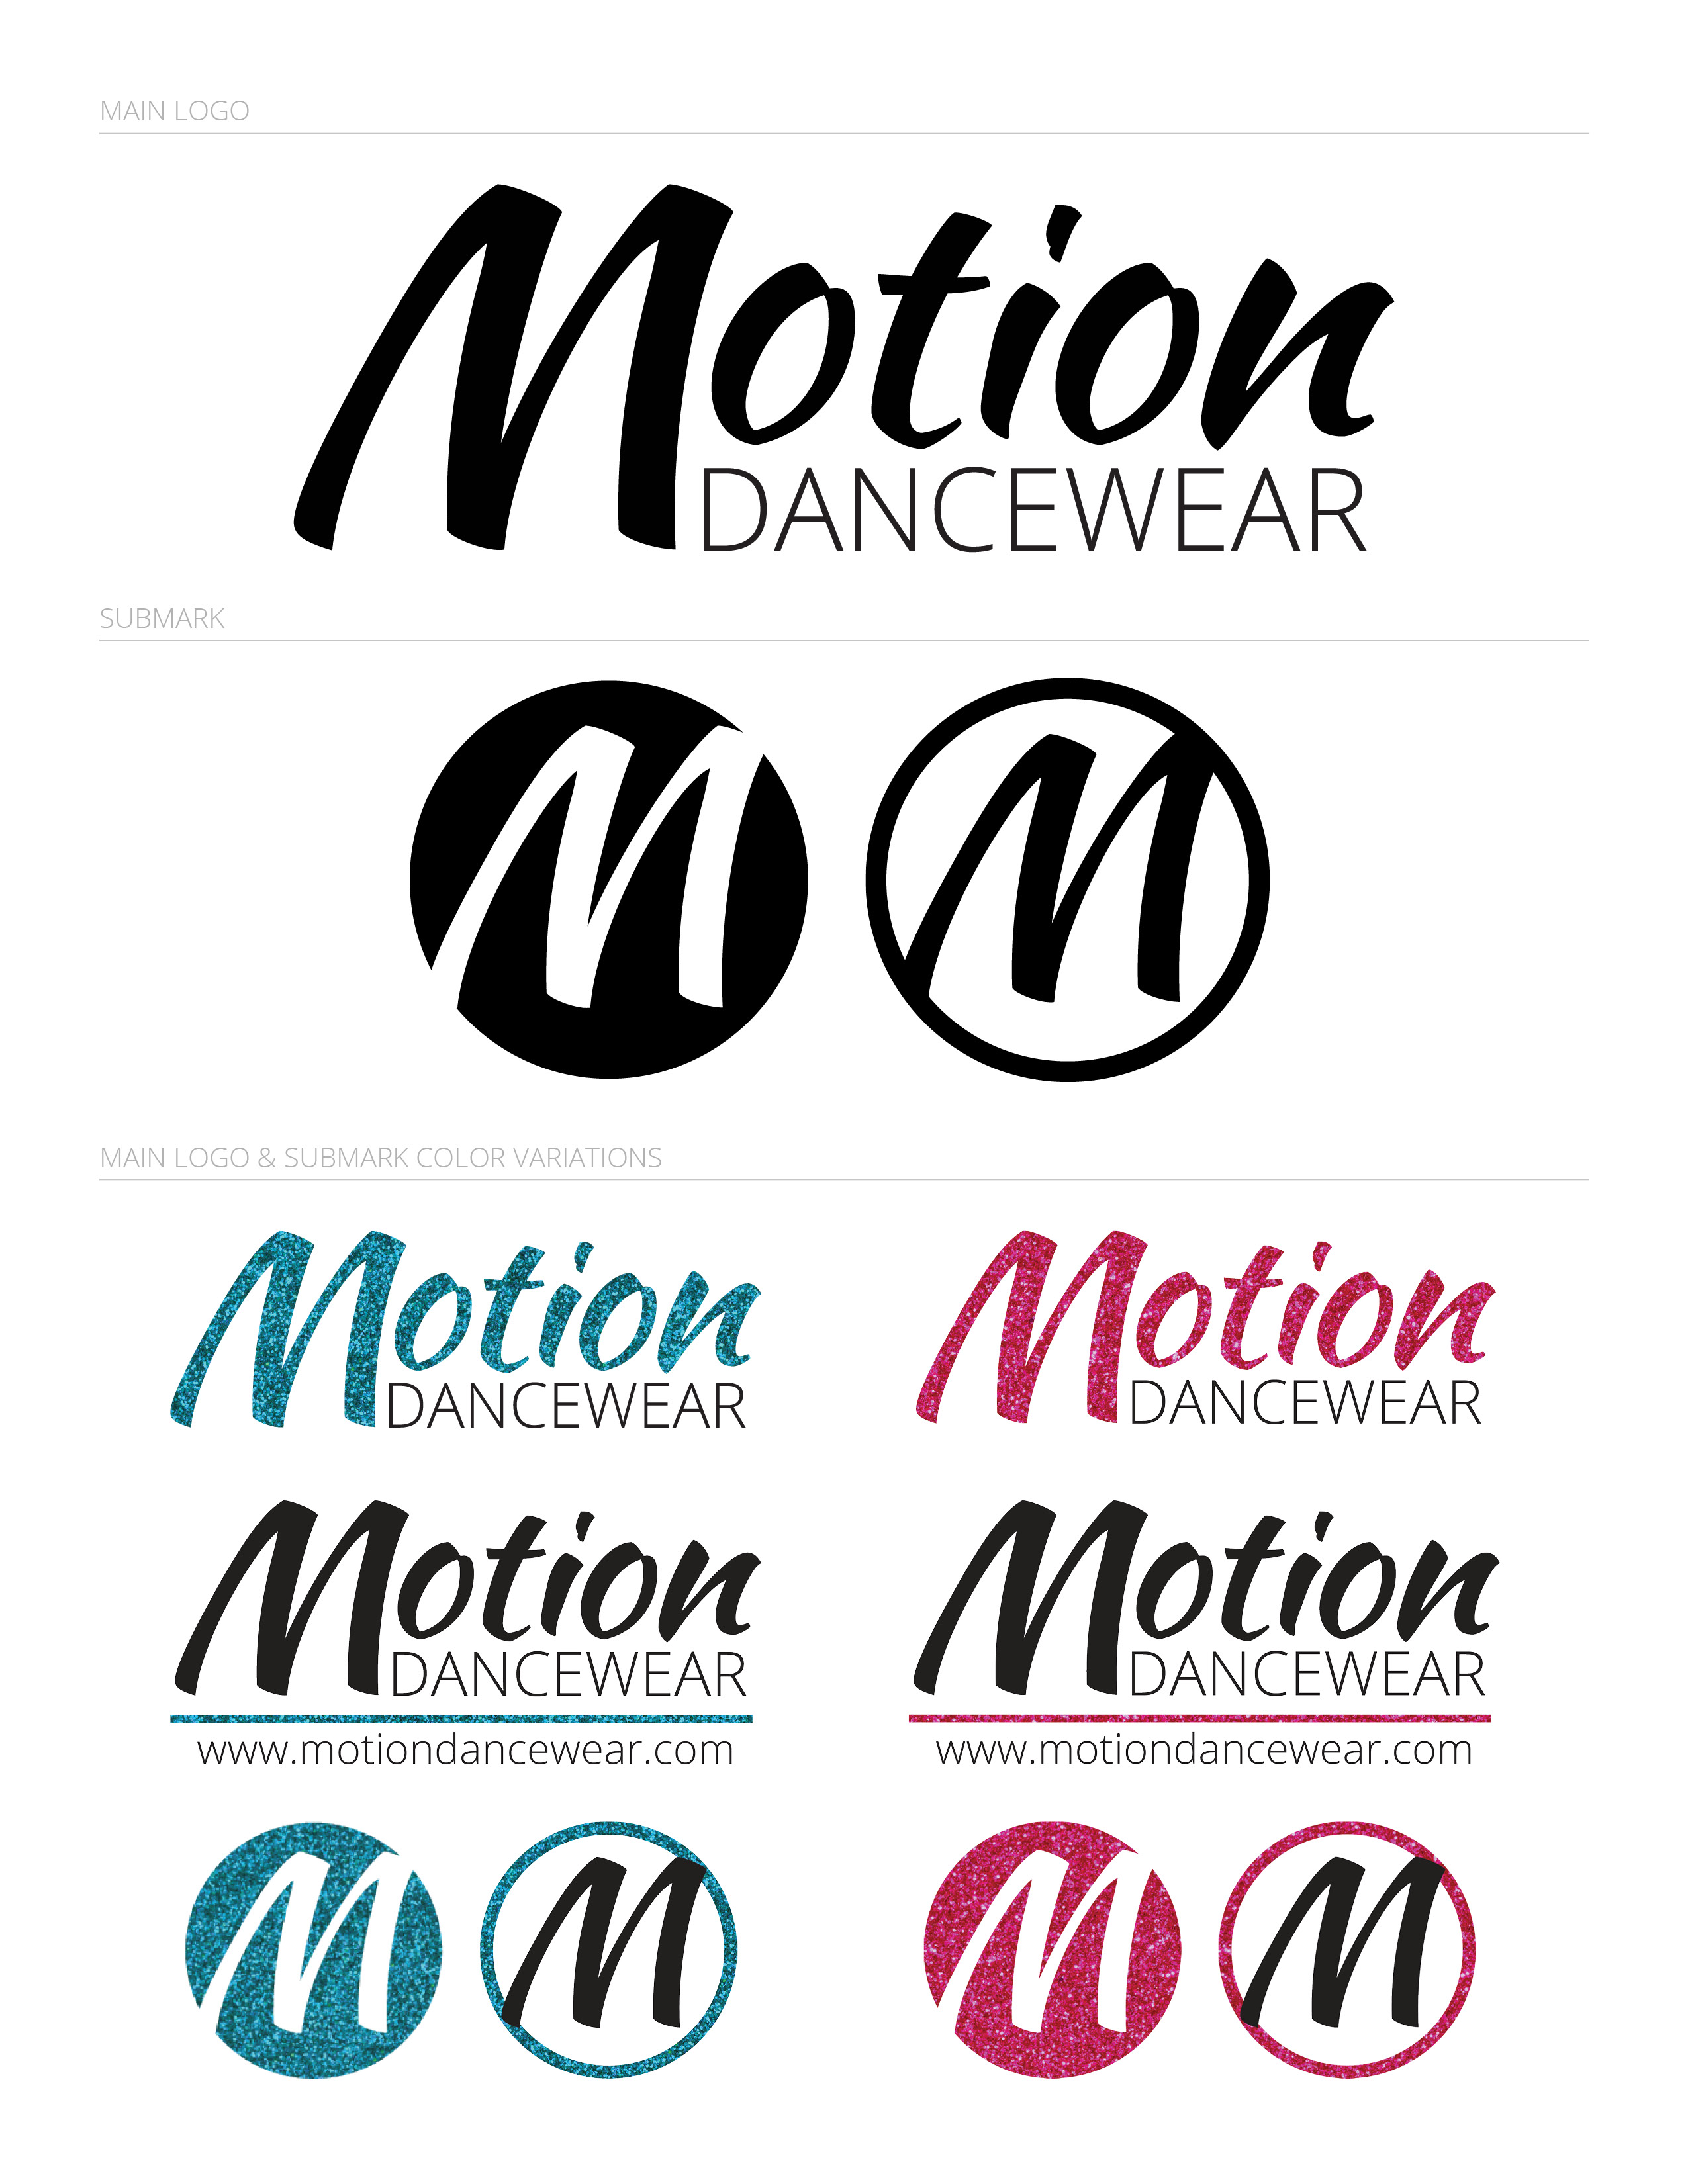 Motion Dancewear